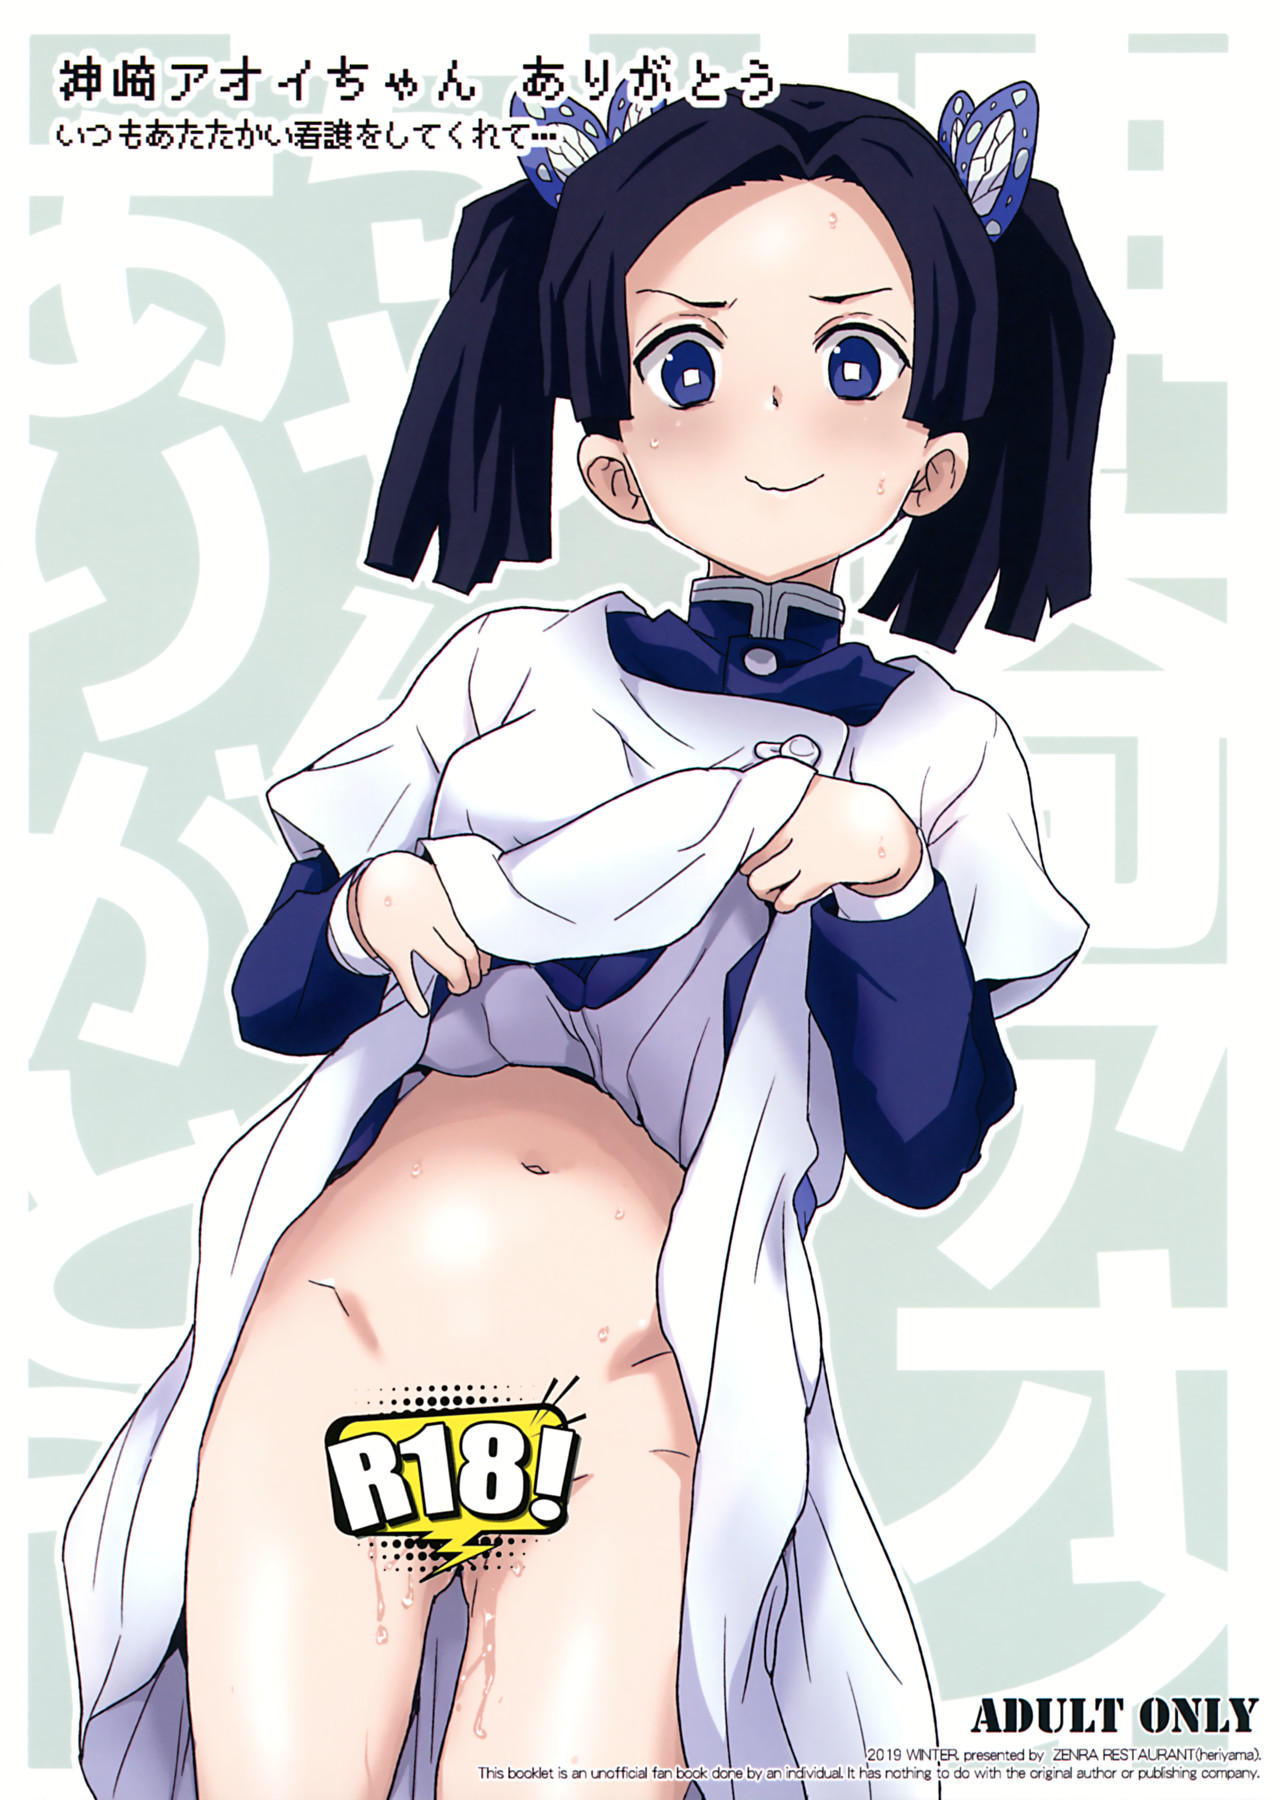 Hentai Manga Comic-Thank You For All The Gentle Nursing Kanzaki Aoi-chan...-Read-1